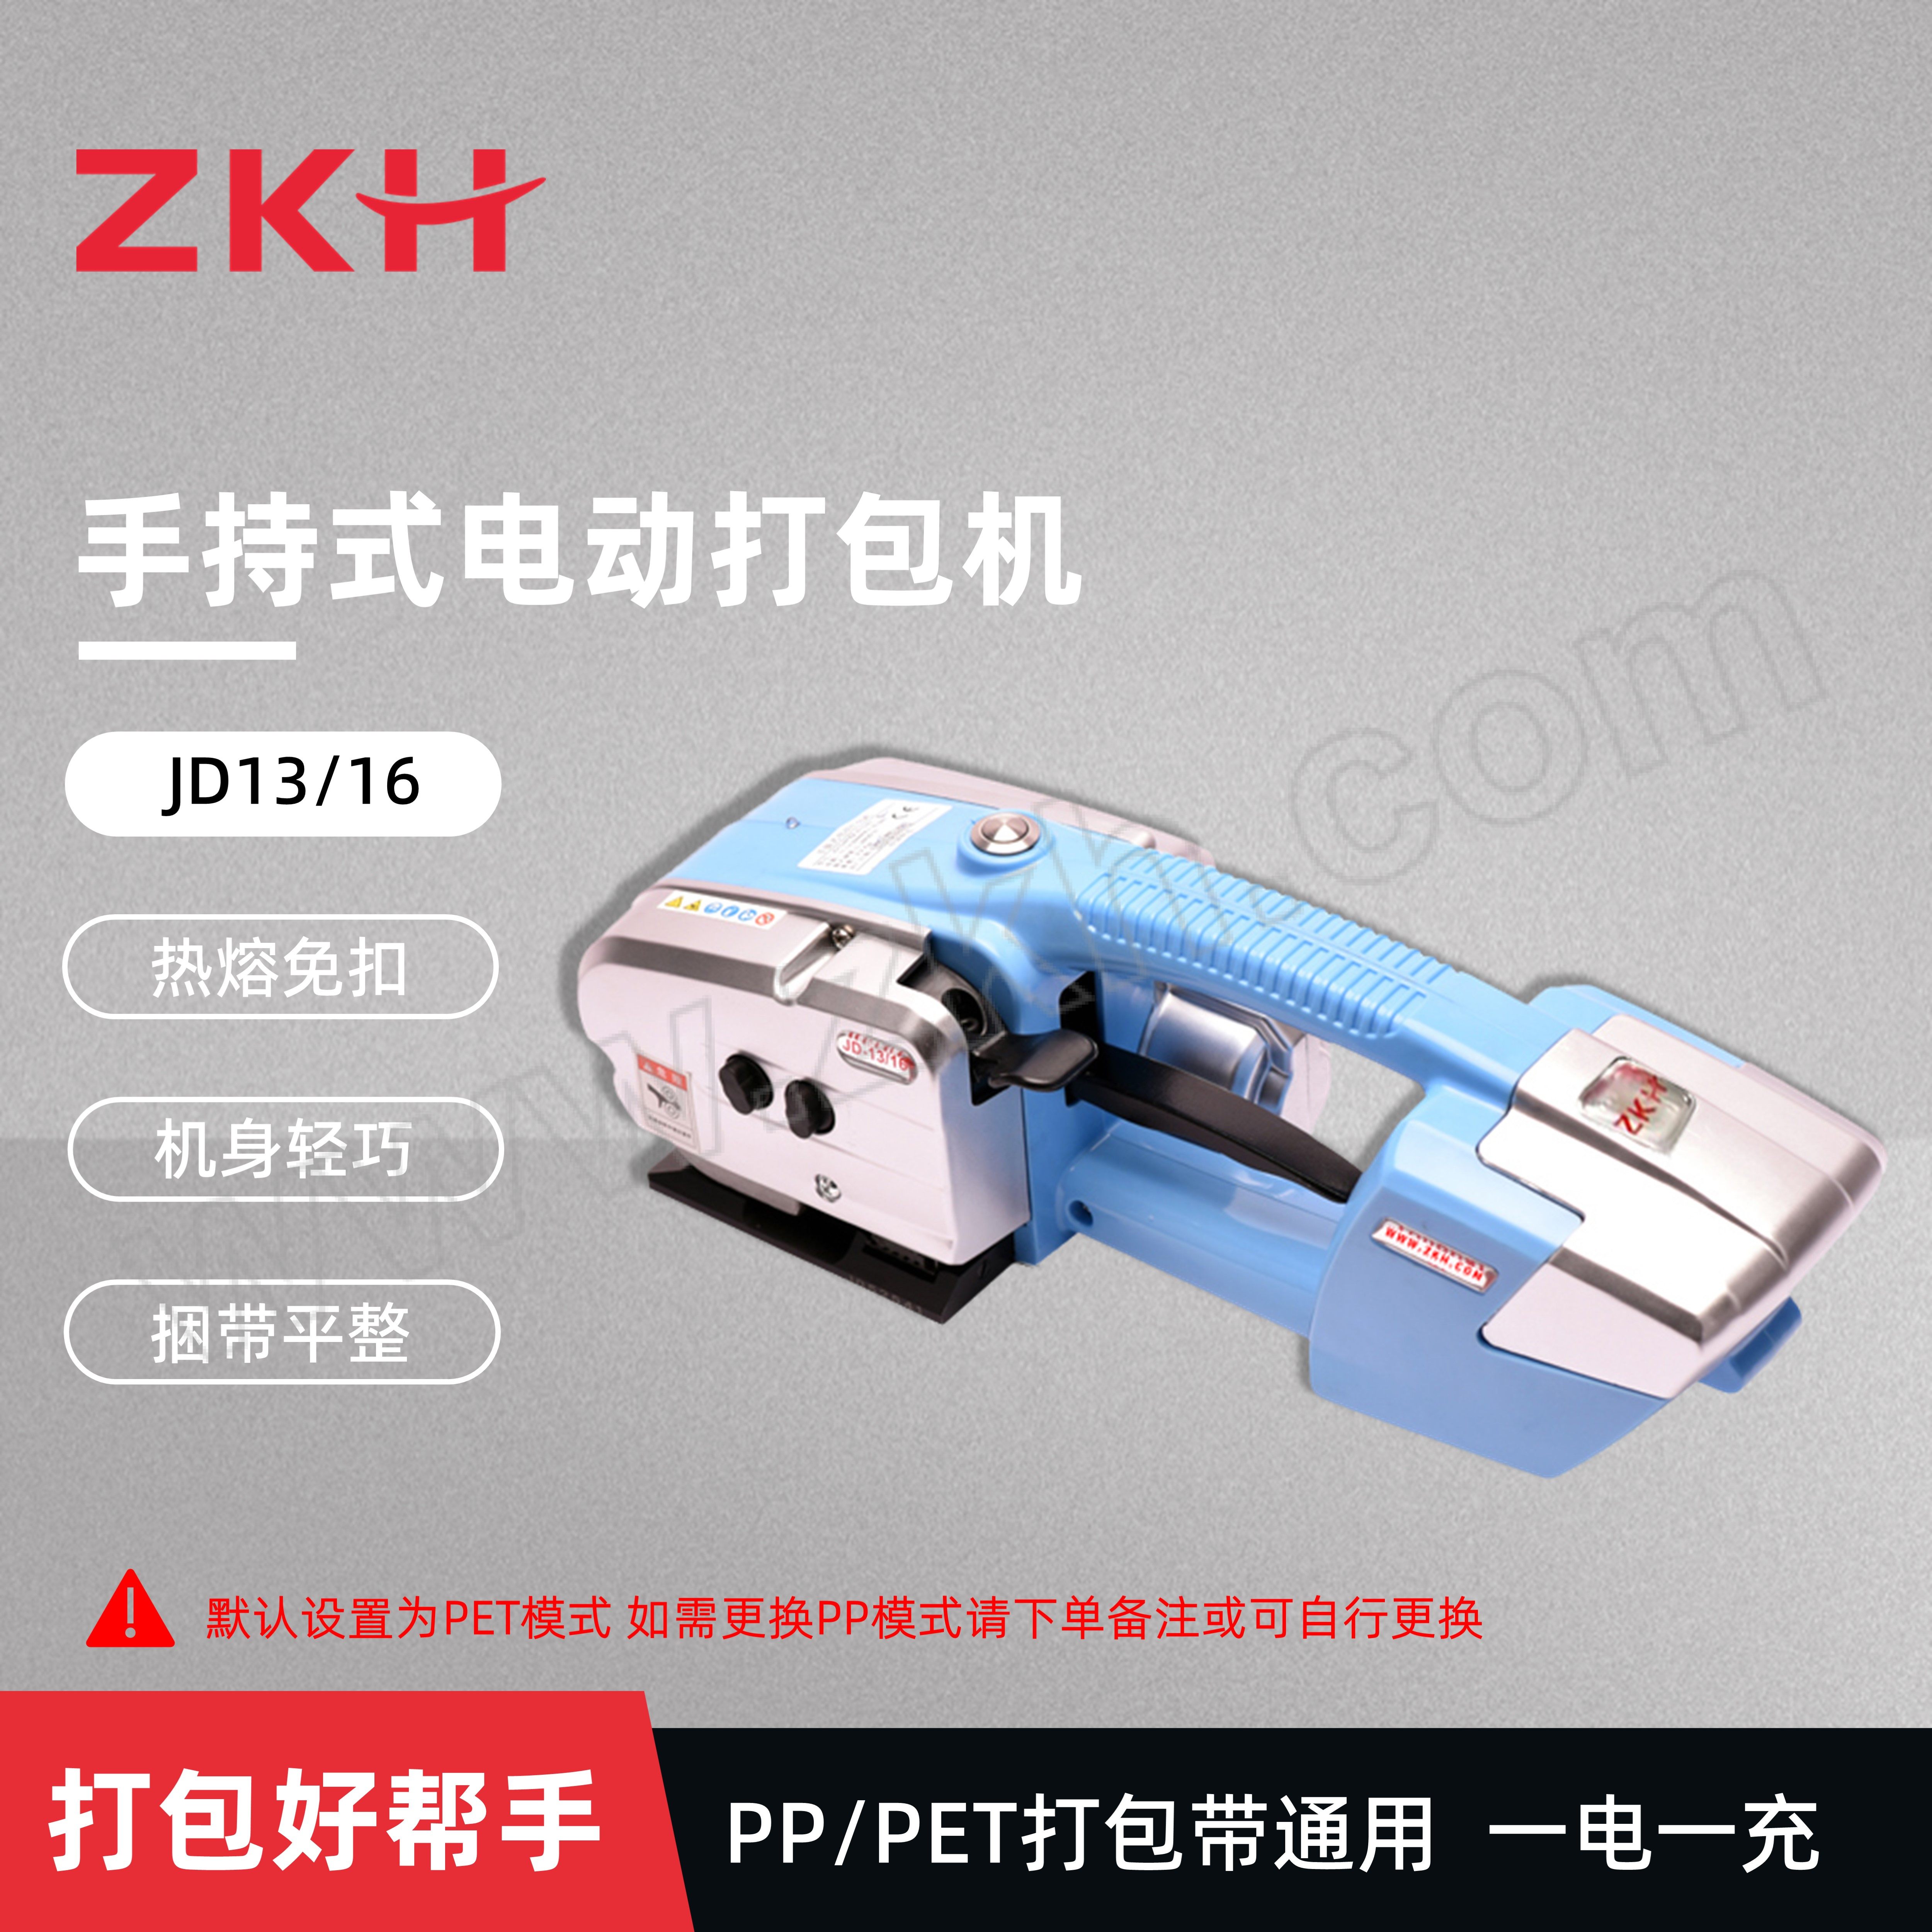 ZKH/震坤行 PP/PET通用电动打包机 JD13/16 适用带宽13~16mm厚0.5~1.2mm 默认设置为PET模式 如需更换PP模式请下单备注或可自行更换 1台